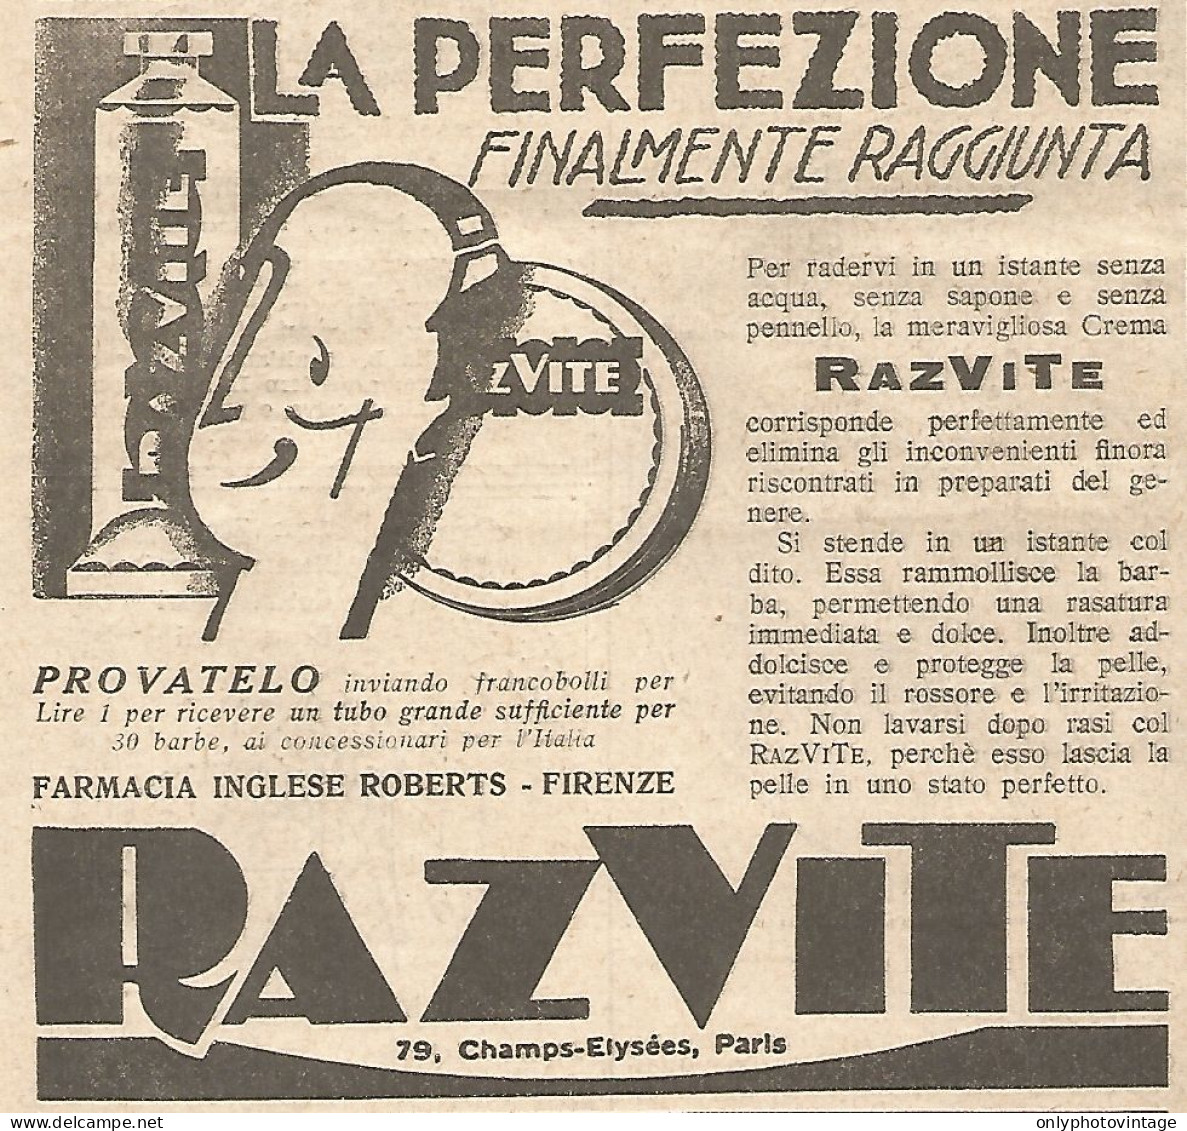 RAZVITE - La Perfezione Finalmente... - Pubblicitï¿½ Del 1932 - Vintage Ad - Publicités